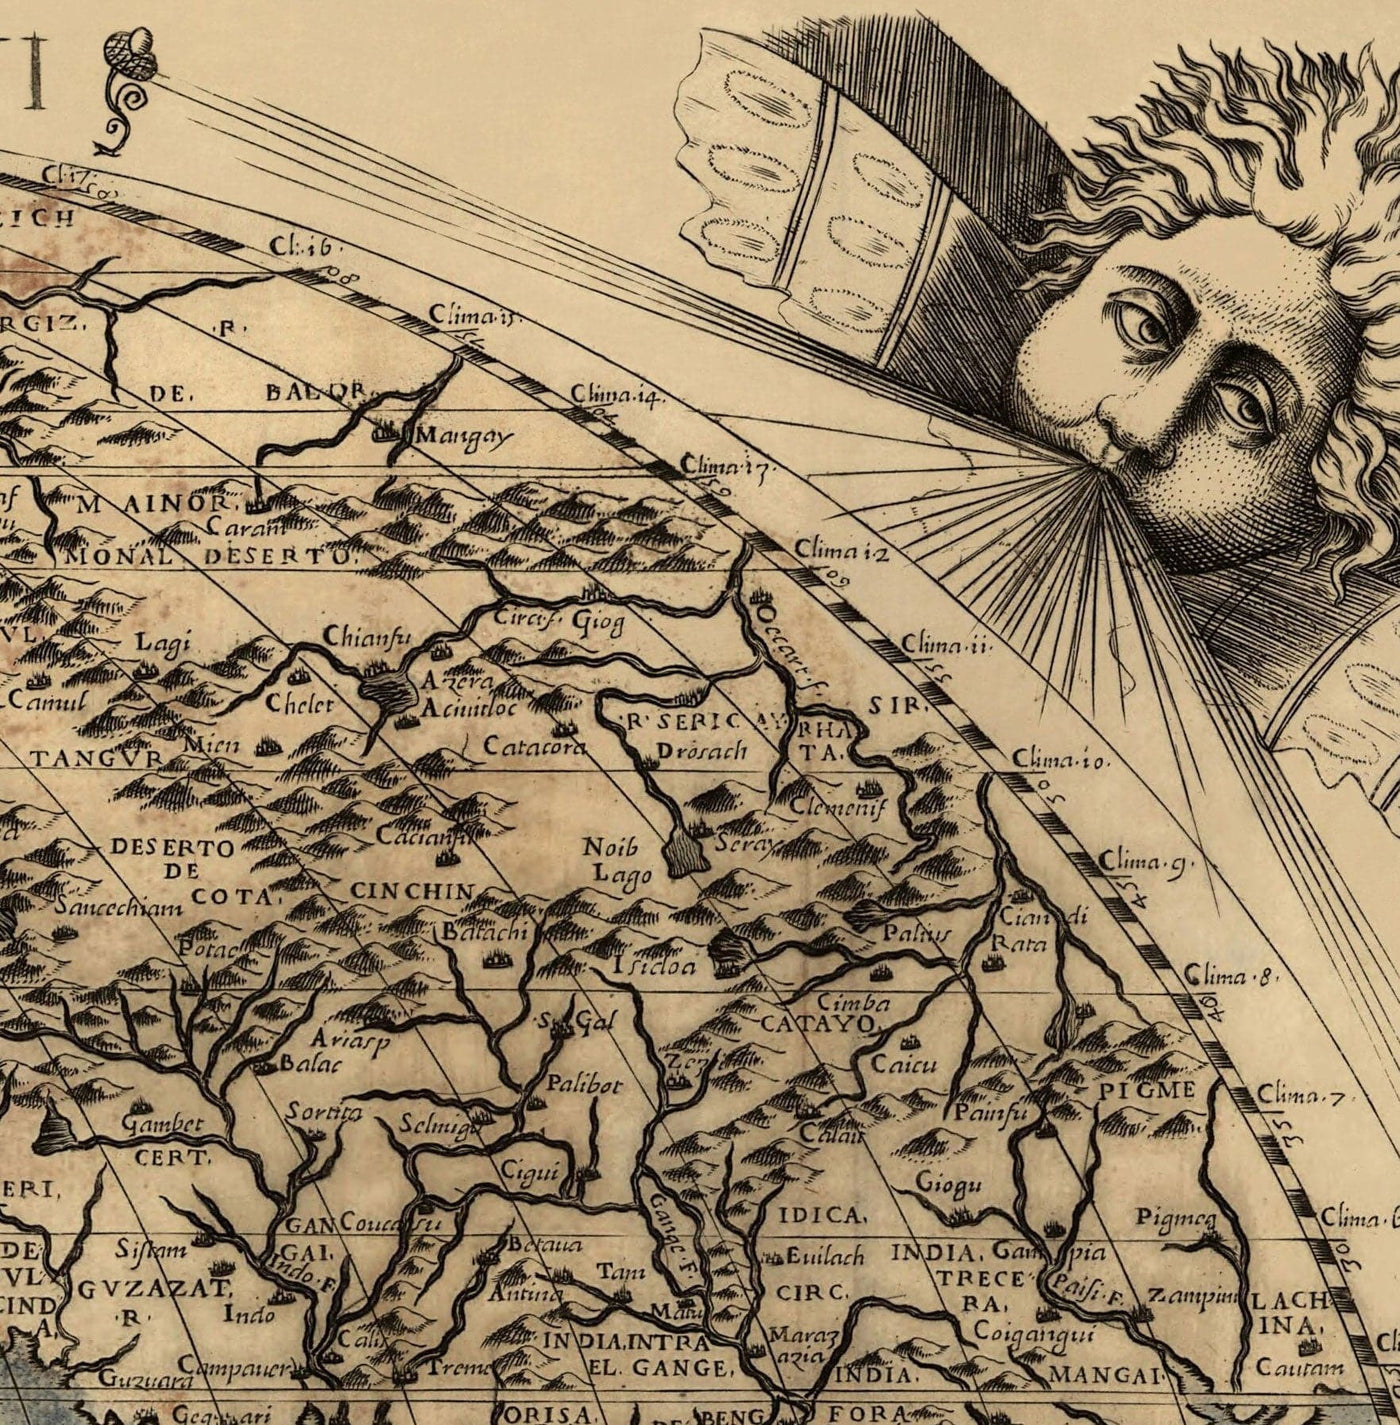 Old World Map, 1565 by Ferando Bertelli - Ancient Atlas Wall Chart - Terra Incognita, Cherubs, Australis